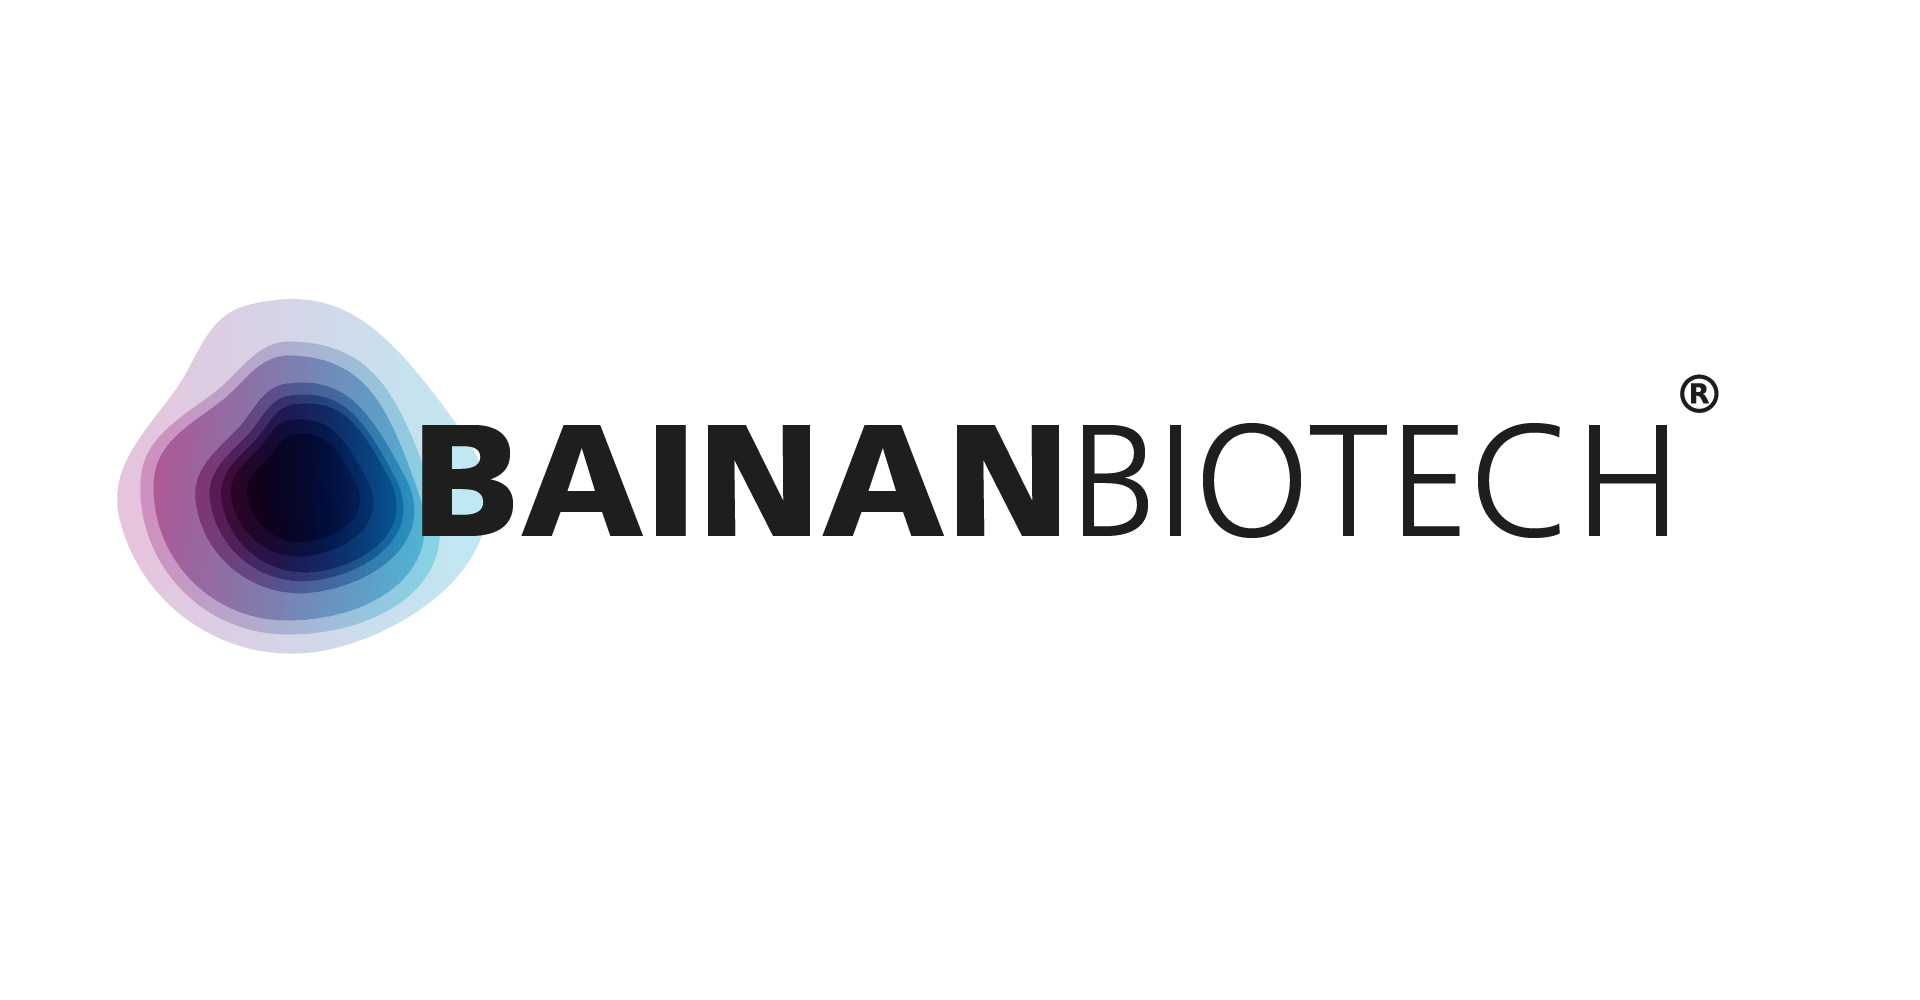 Bainan Biotech